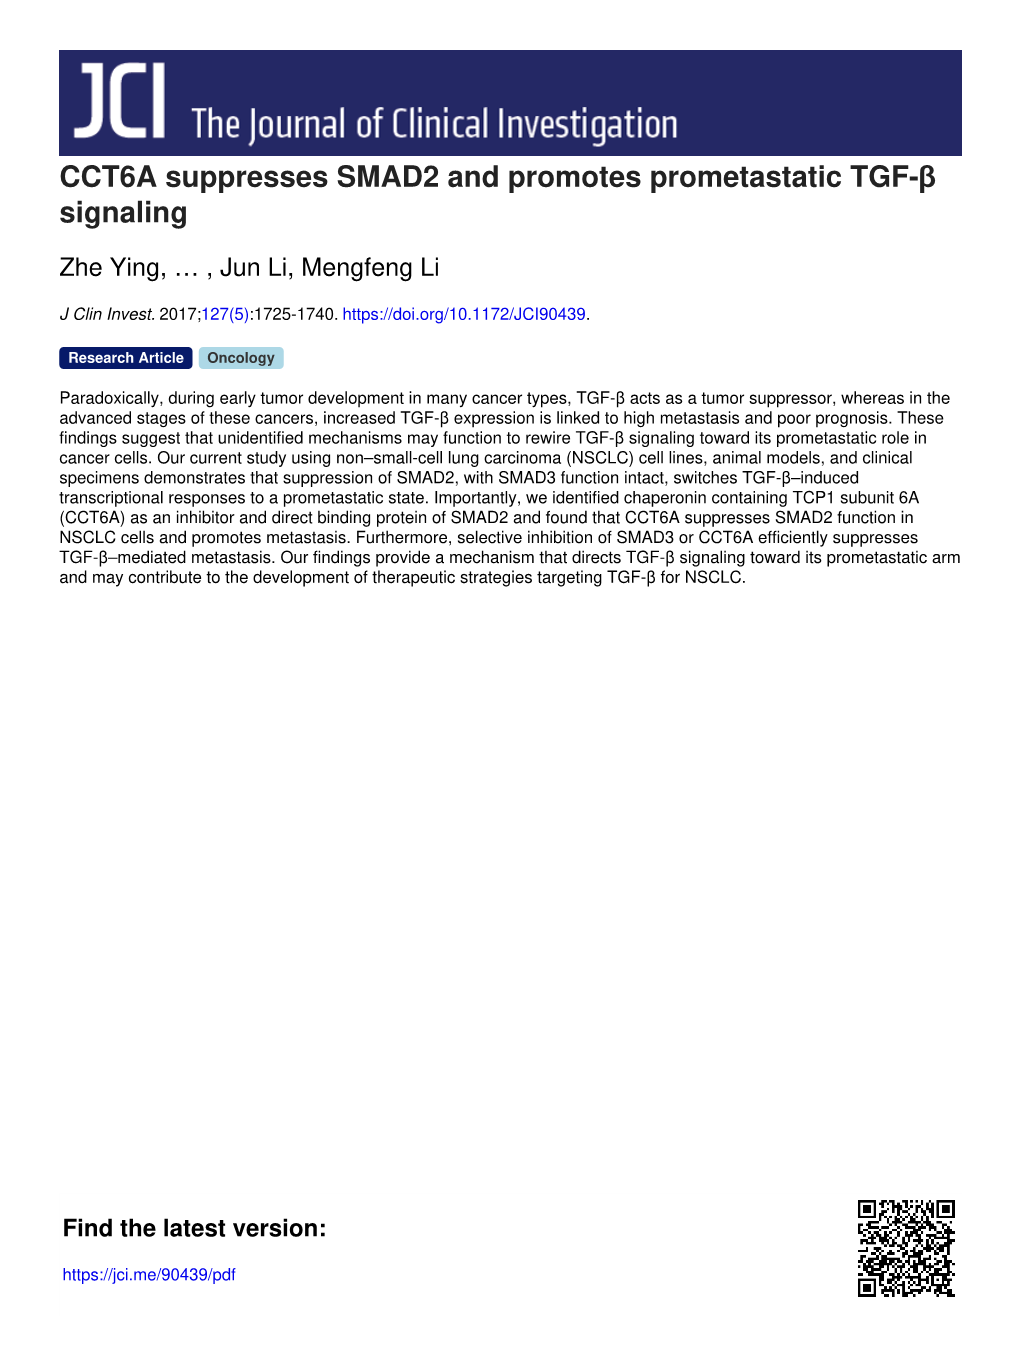 CCT6A Suppresses SMAD2 and Promotes Prometastatic TGF-Β Signaling